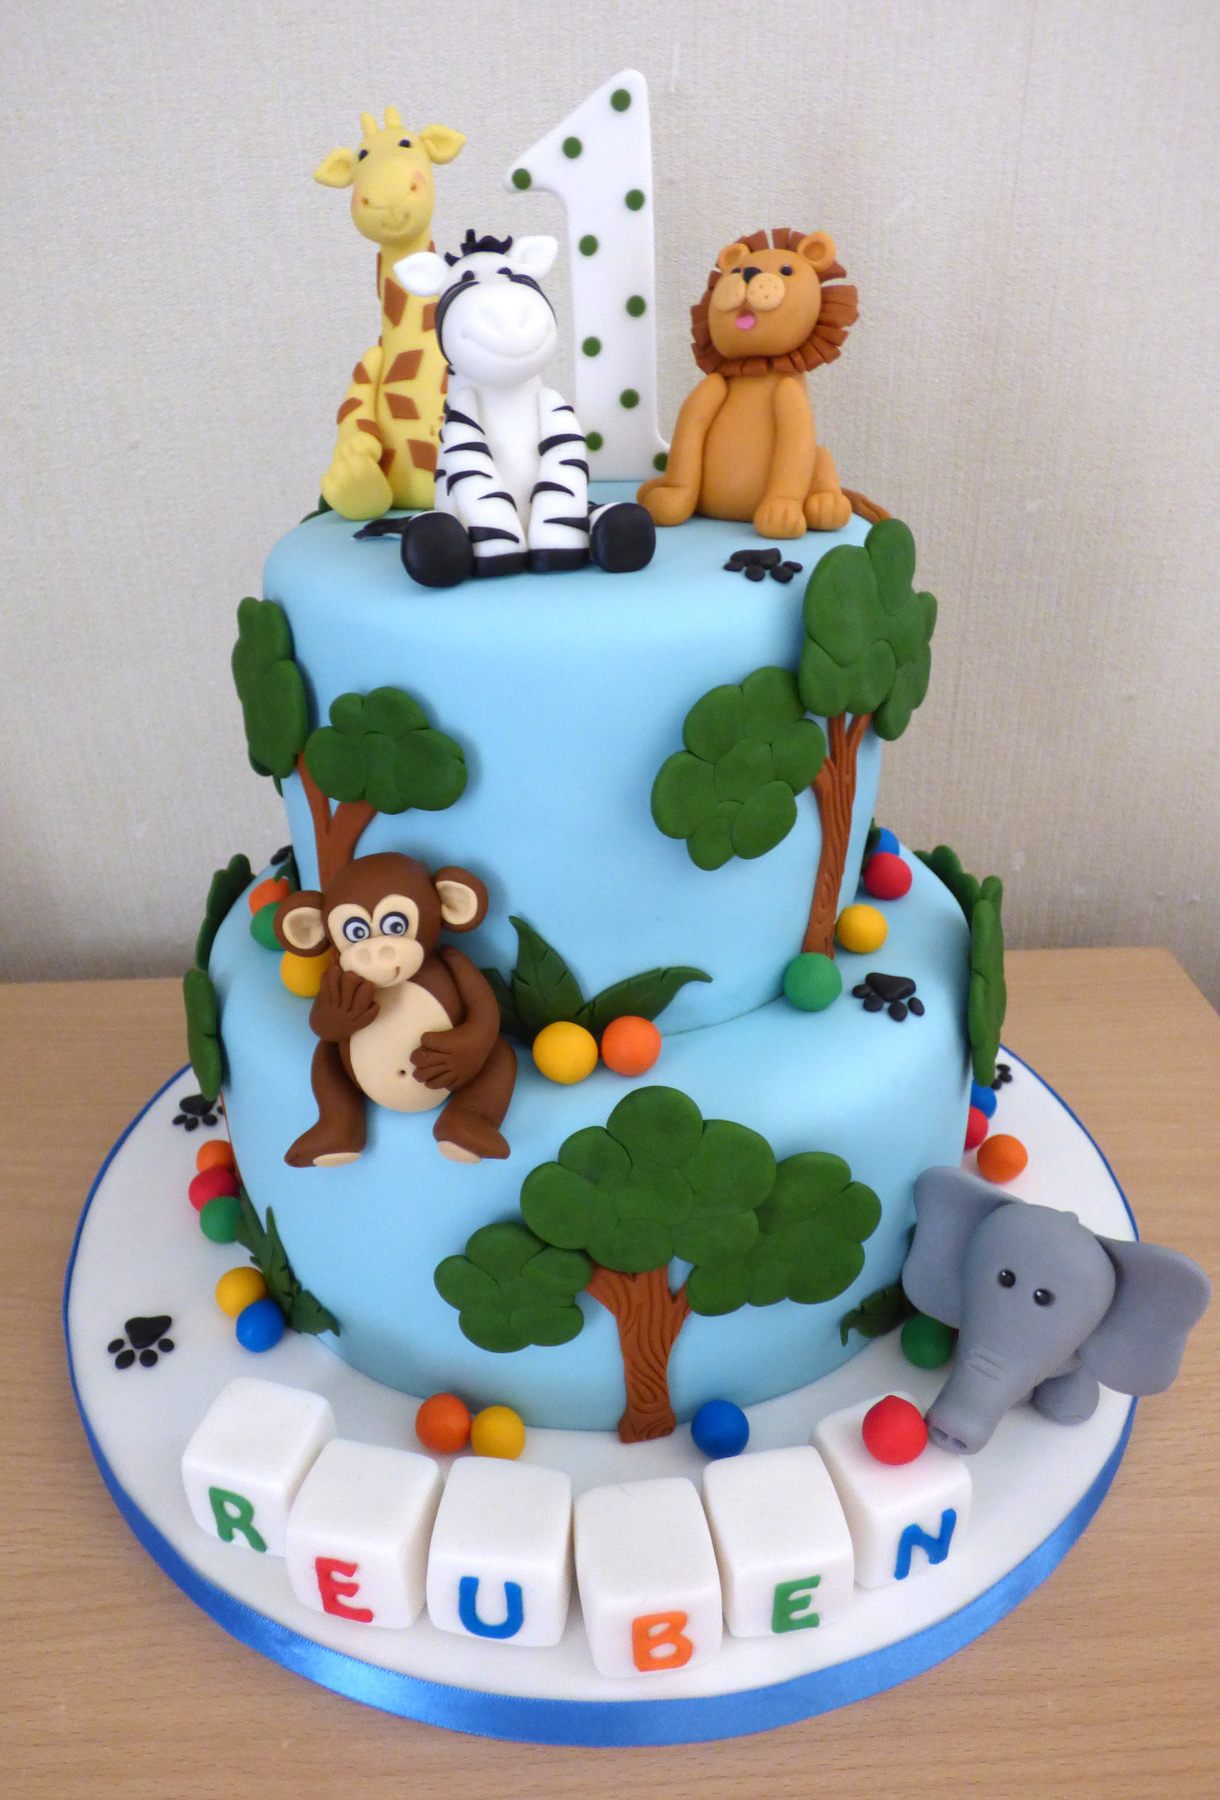 All About Cakes - Animal Kingdom theme cake 🐅🦓🦍🦨🌳 • • • #allaboutcakes  #seemamalpani #animal #kingdom #birthday #happybirthday #happy #smile  #yummy #delicious #themecake #pune #vibes #mood #supportsmallbusiness  #supportlocal #homebaker #cakes ...